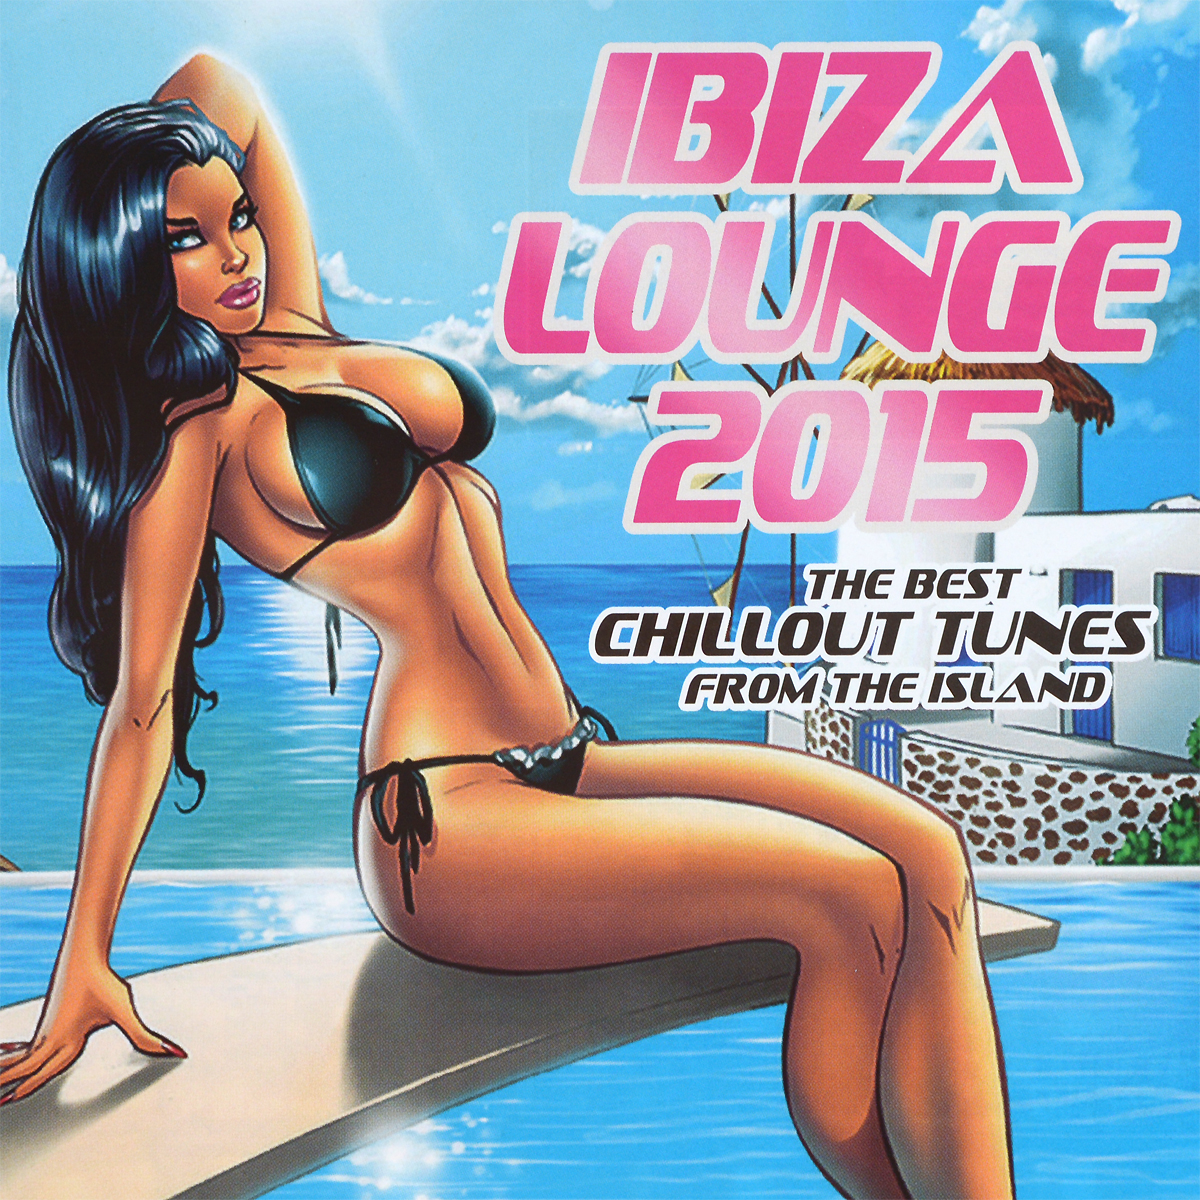 Ibiza Lounge 2015